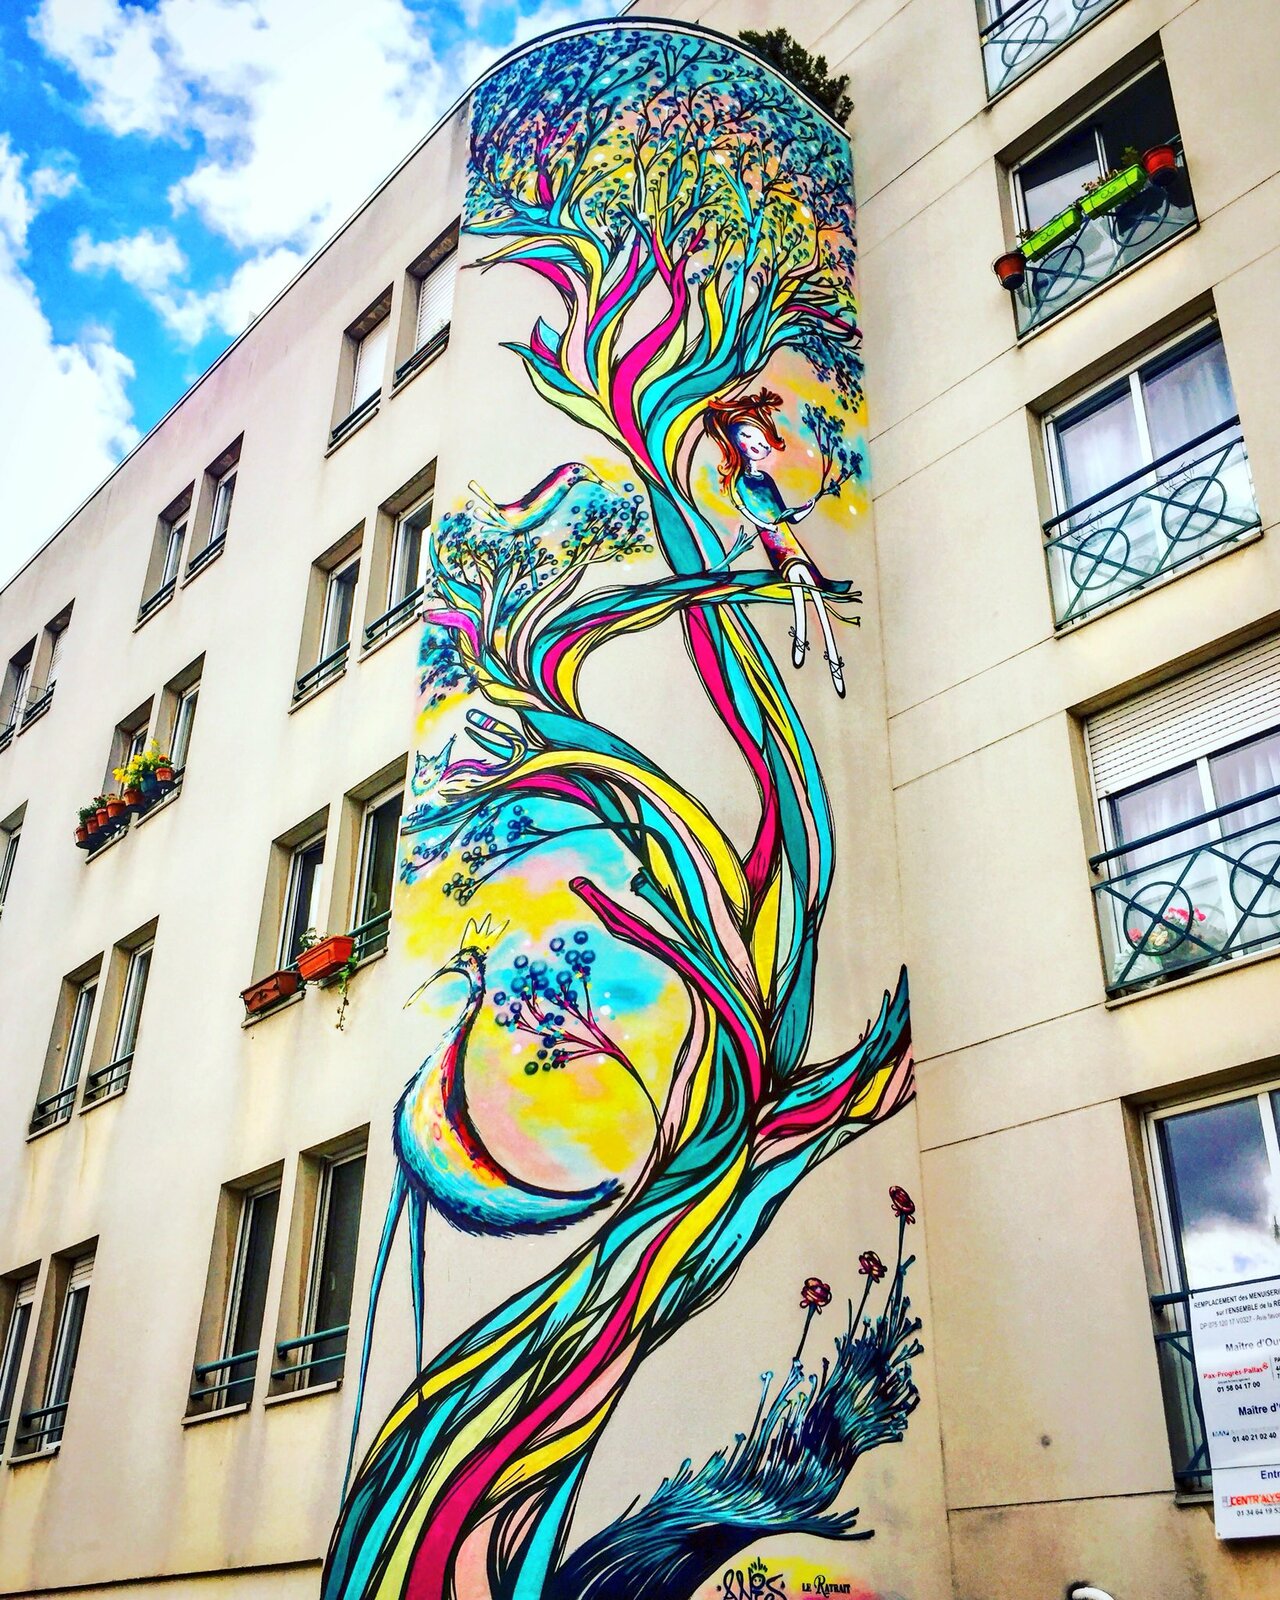 « enchanted tree » by @Anis_street_art #anisstreetart #streetart #graffiti #spray #bombing #wall #sprayart #urbanart #graffitiart #streetphoto #nirindastreet https://t.co/PHAyXXEWOc